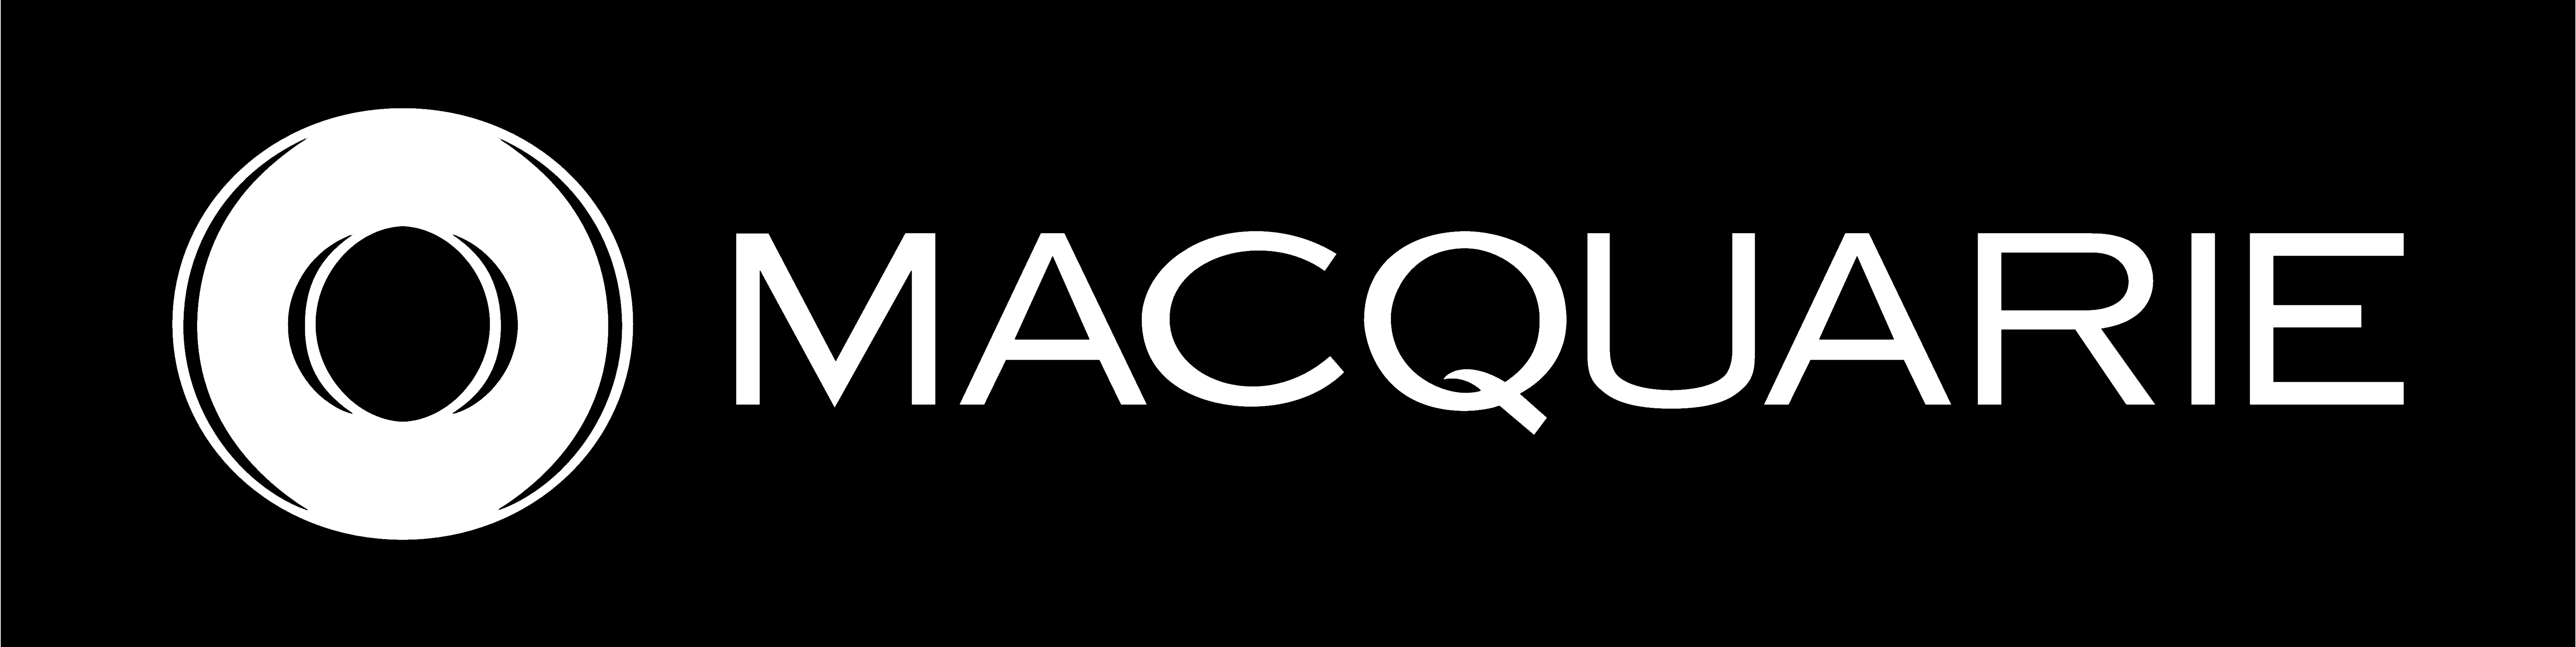 Macquarie Logo - Macquarie | Brands | Brandirectory